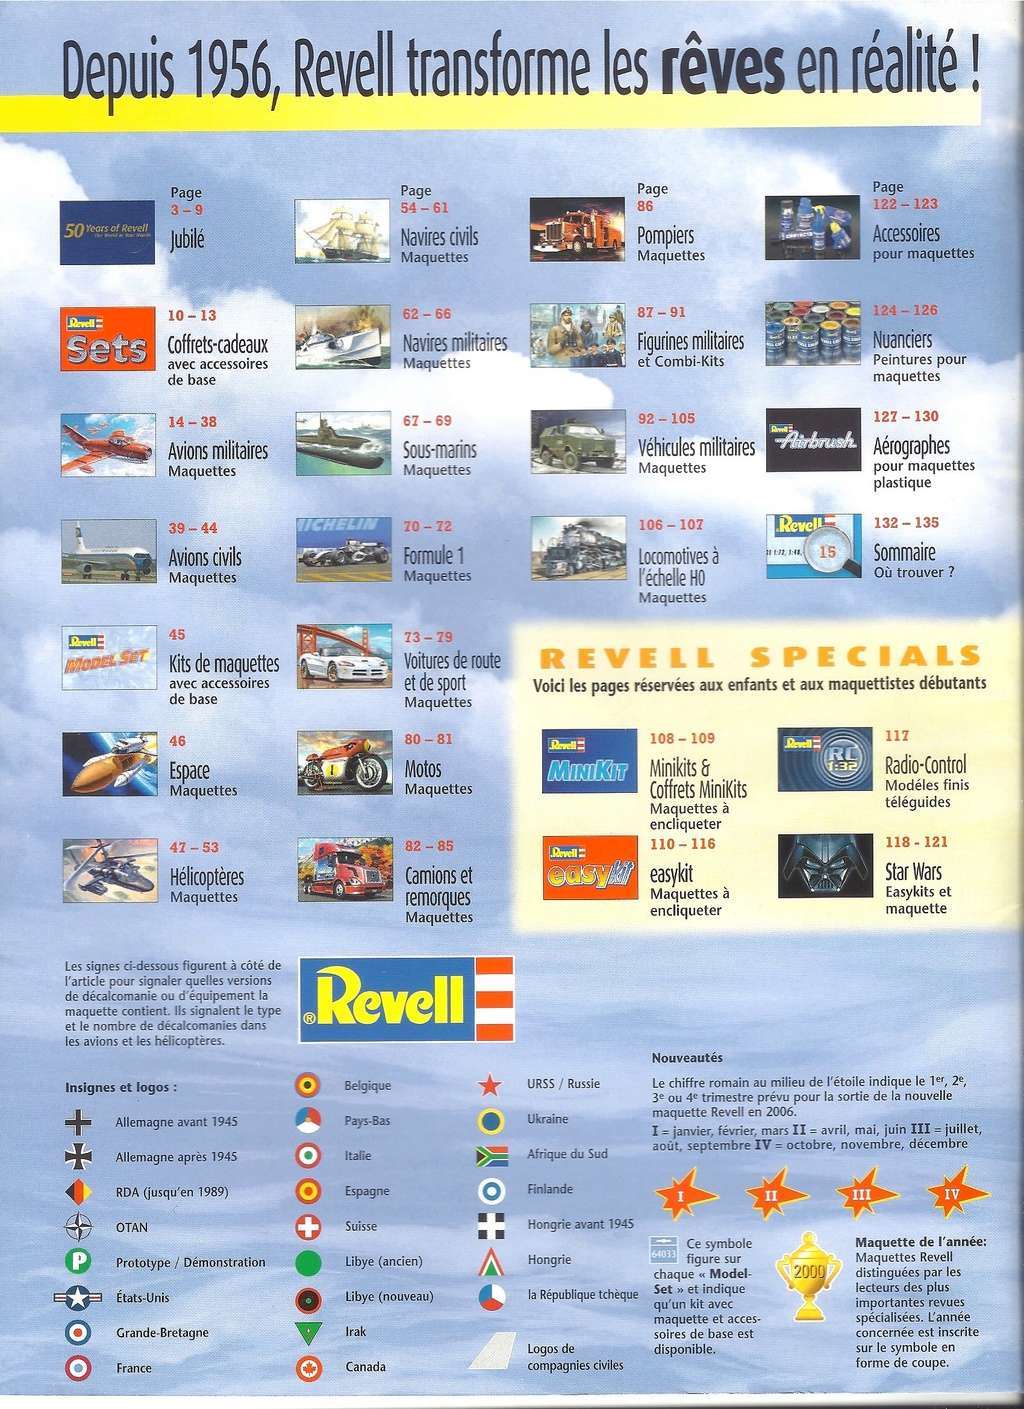 [REVELL 2006] Catalogue 2006, les 50 ans de la marque Revel424